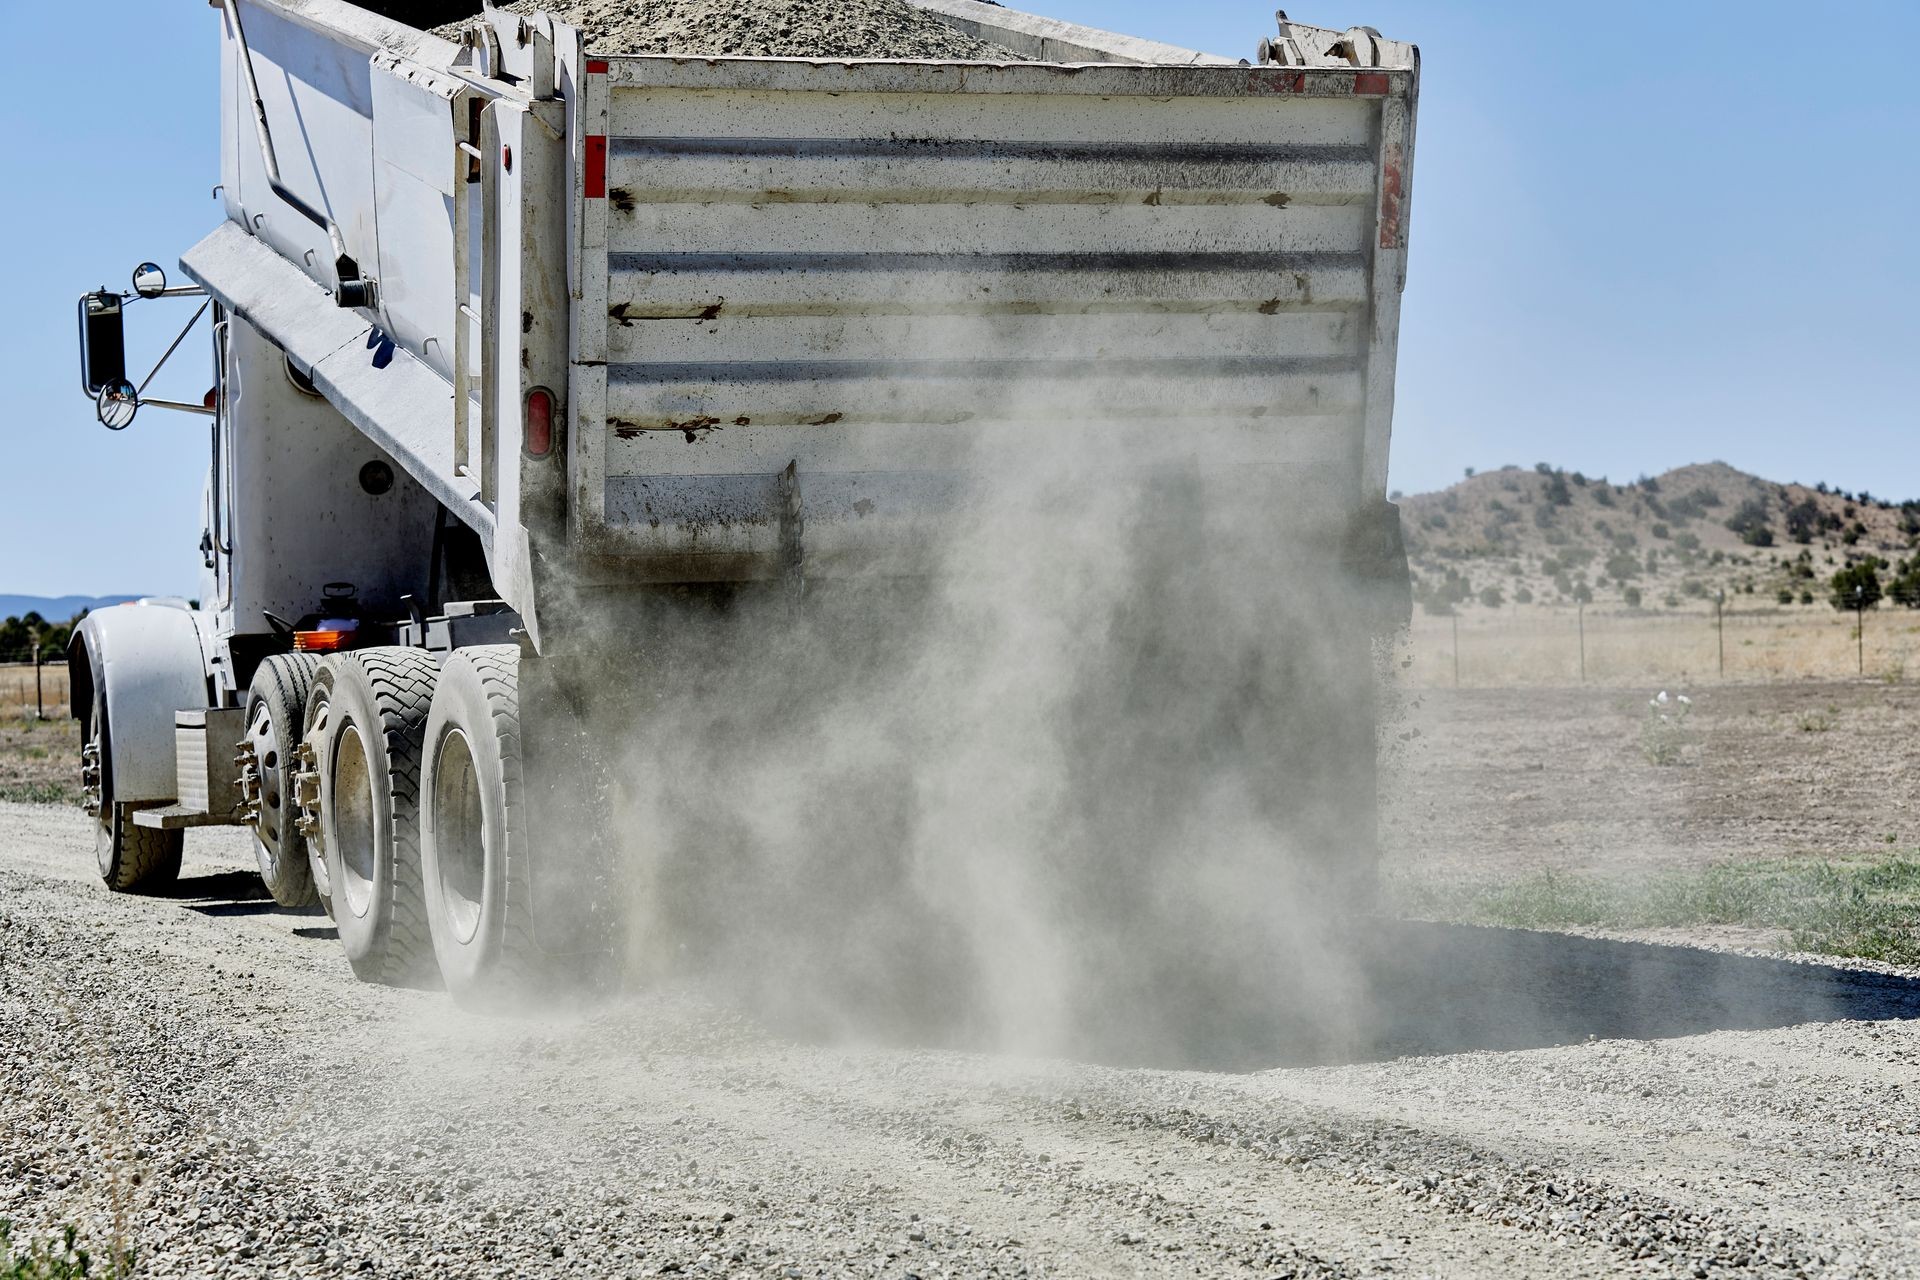 A dump truck spreading gravel on a dirt driveway